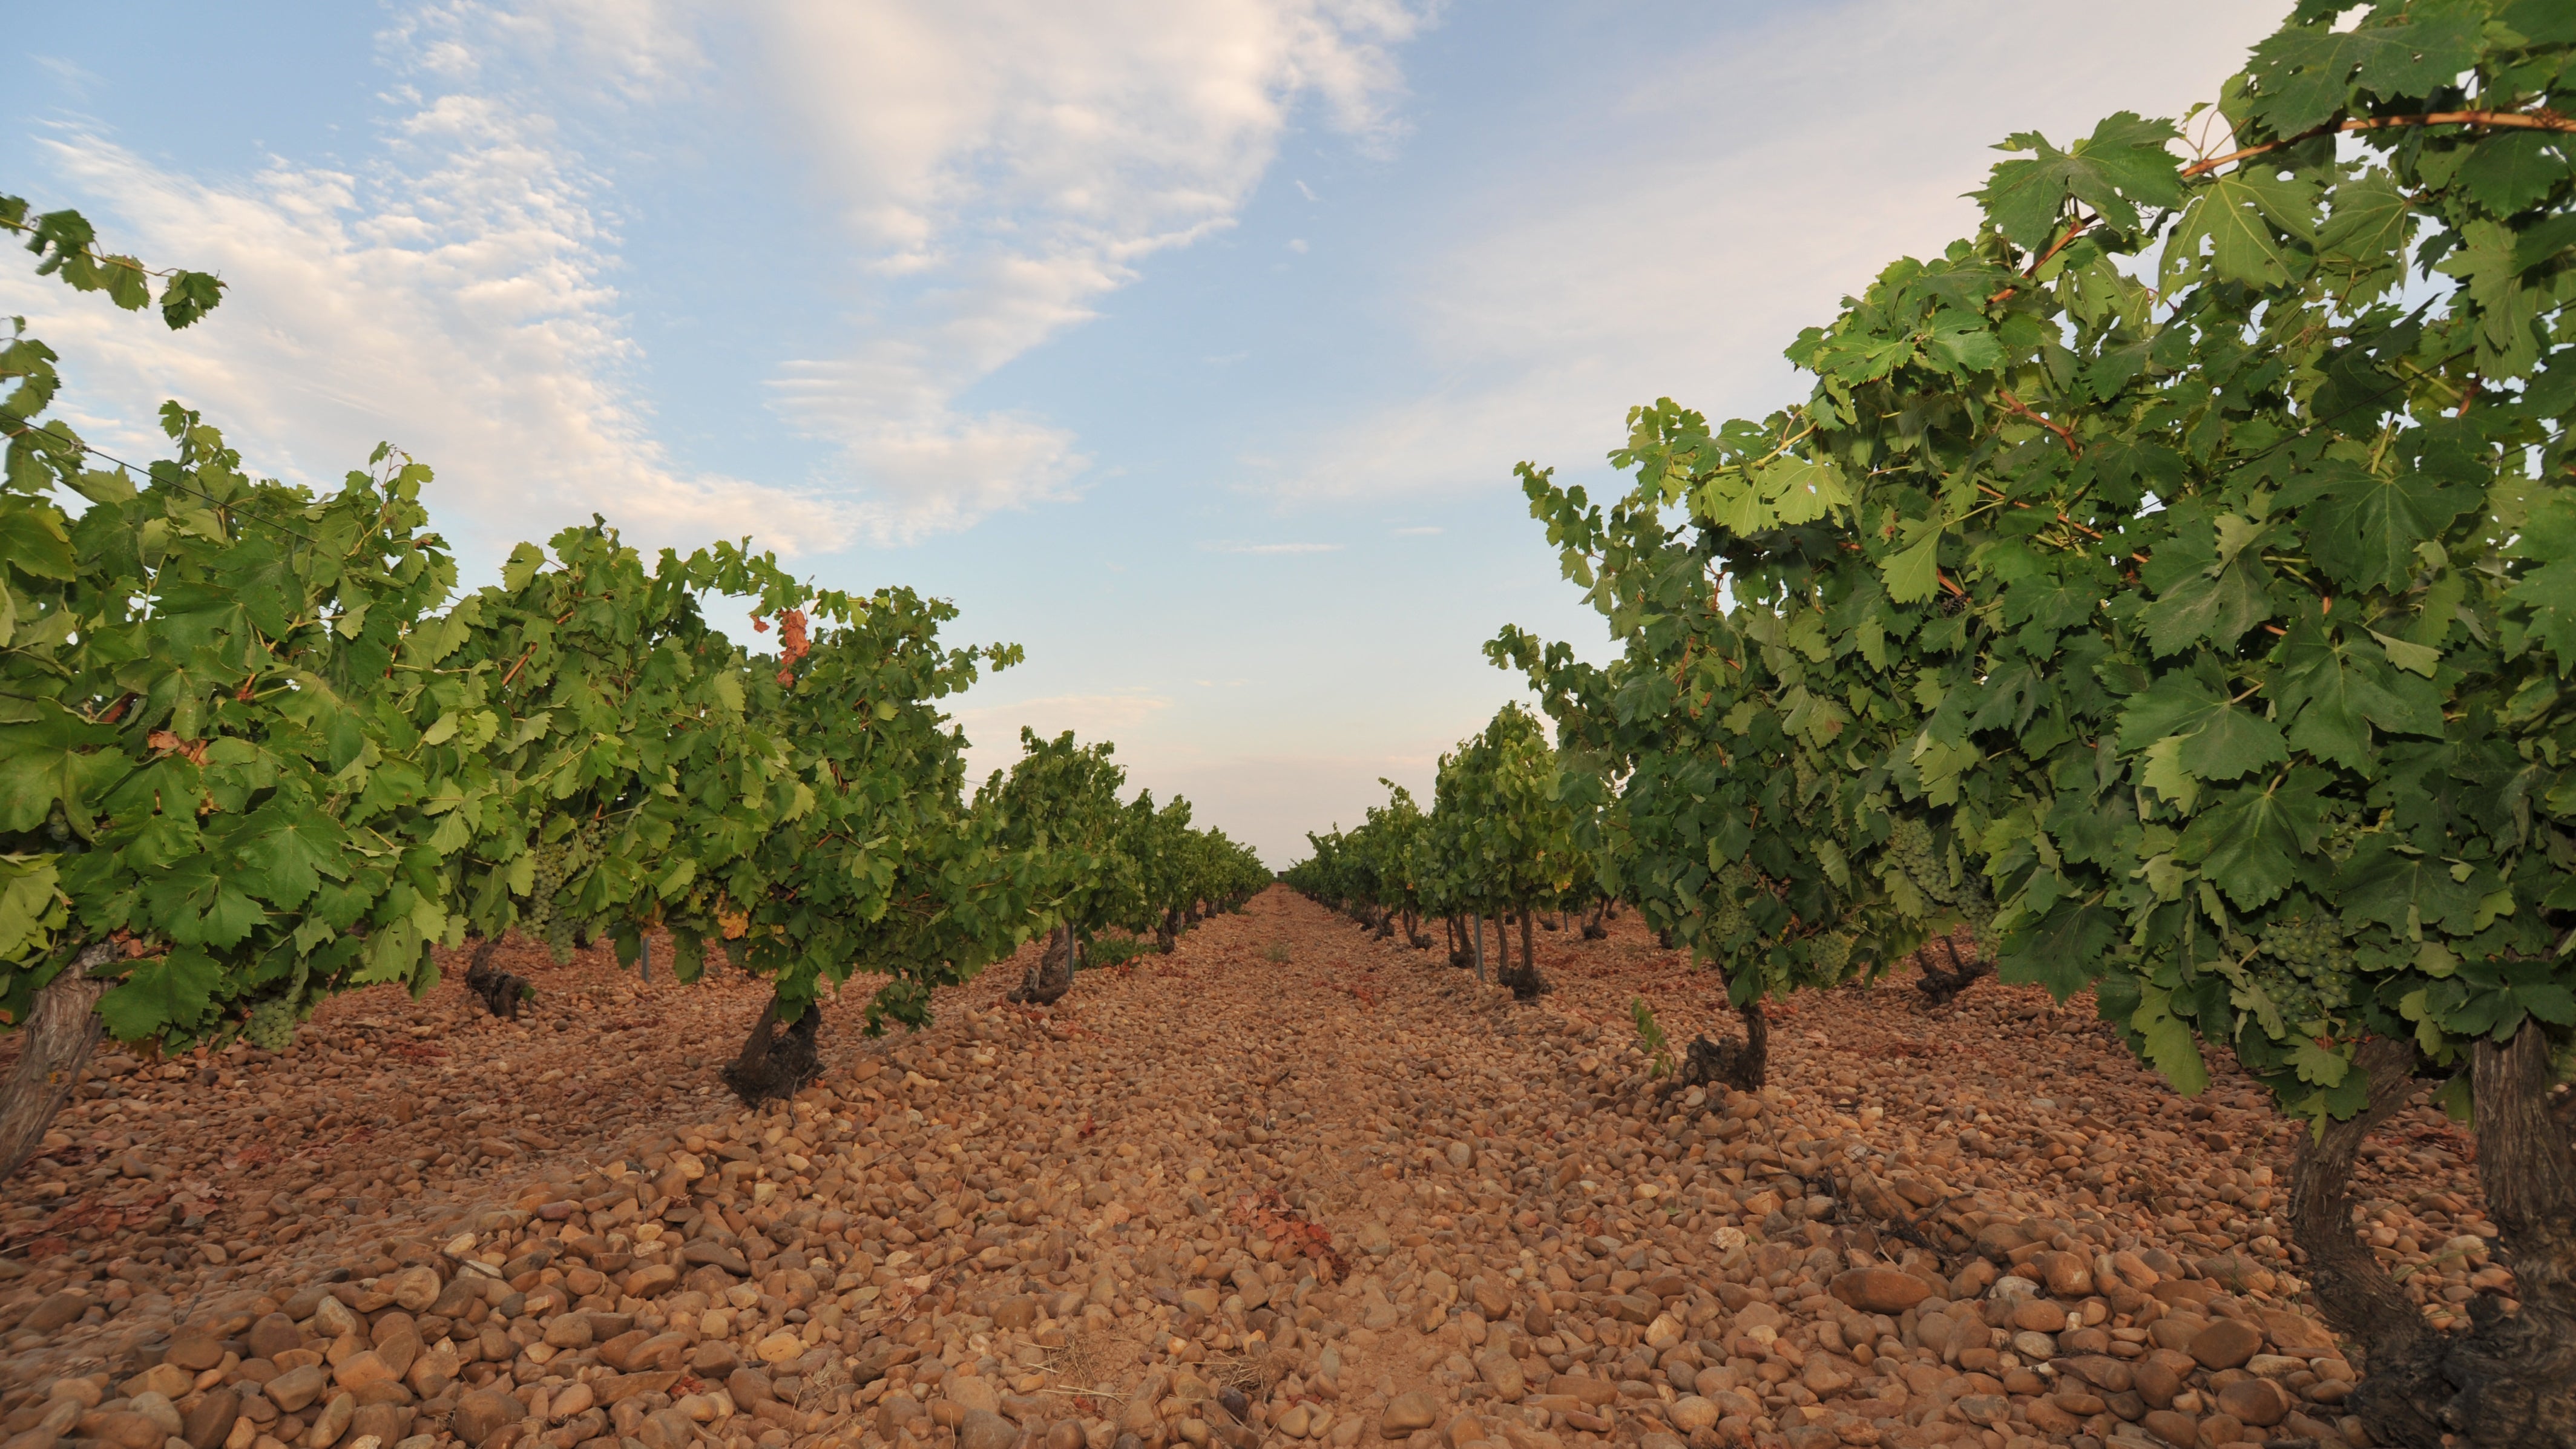 Close up of vines in a vineyard in the Spanish wine region of Rueda